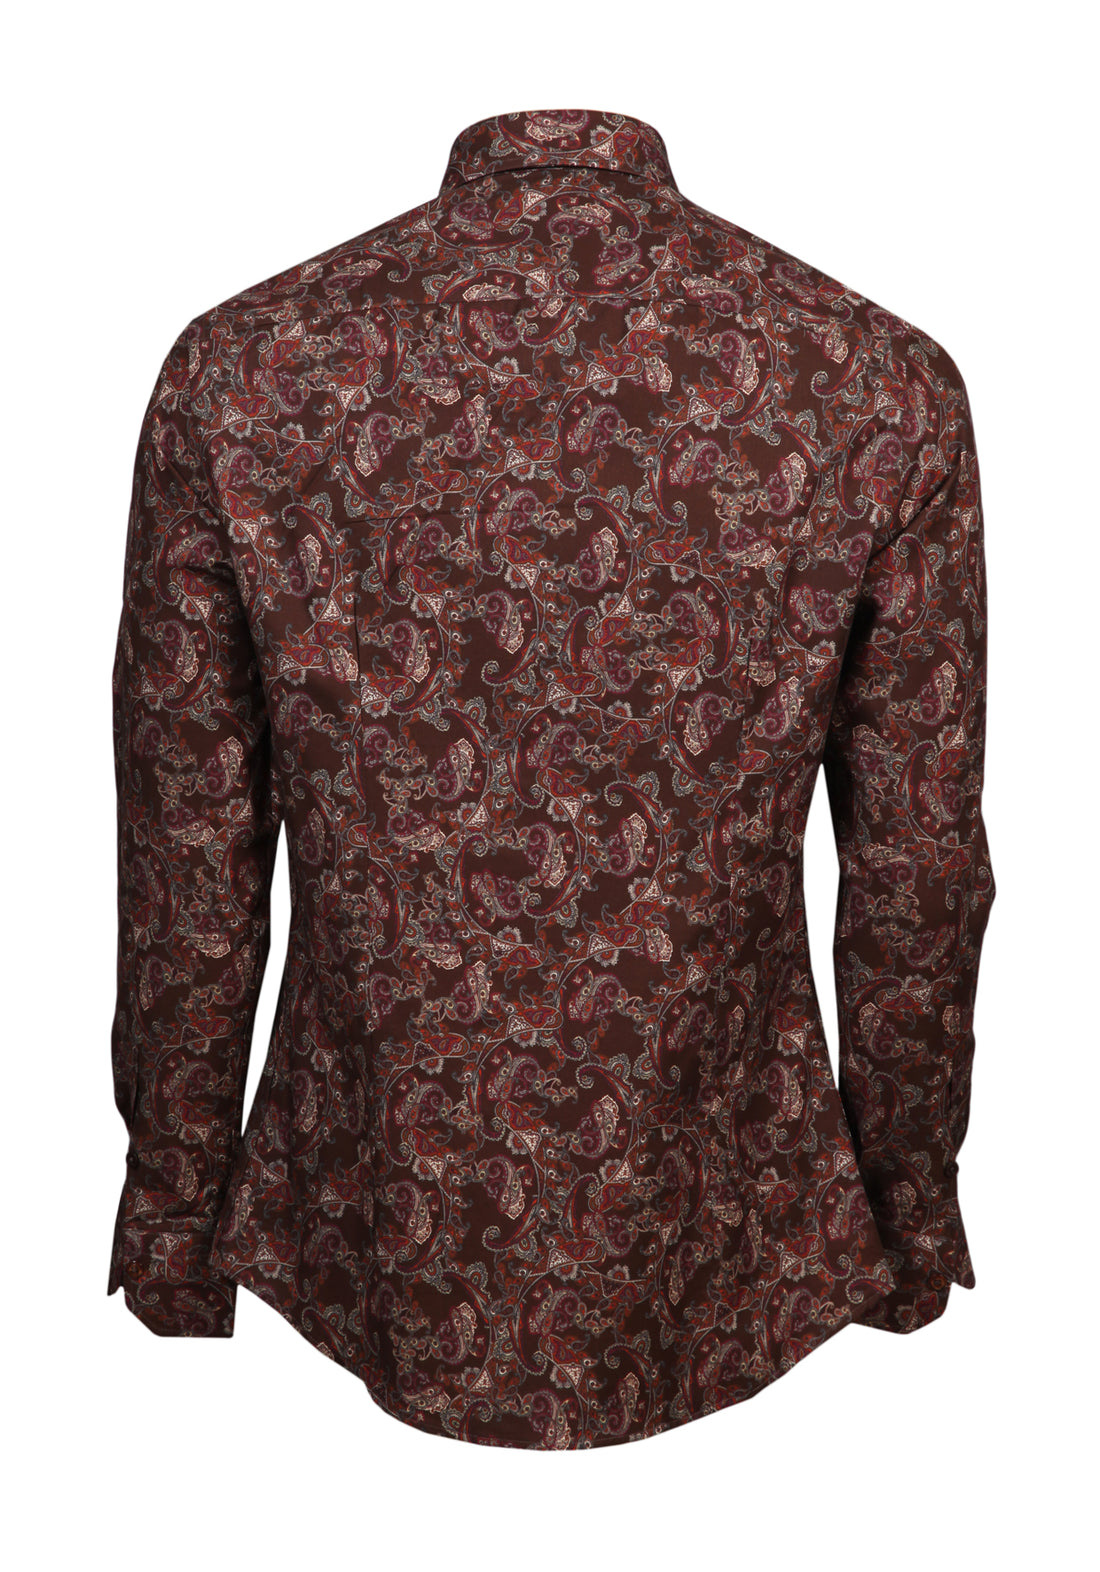 Bordeaux jacquard patterned shirt